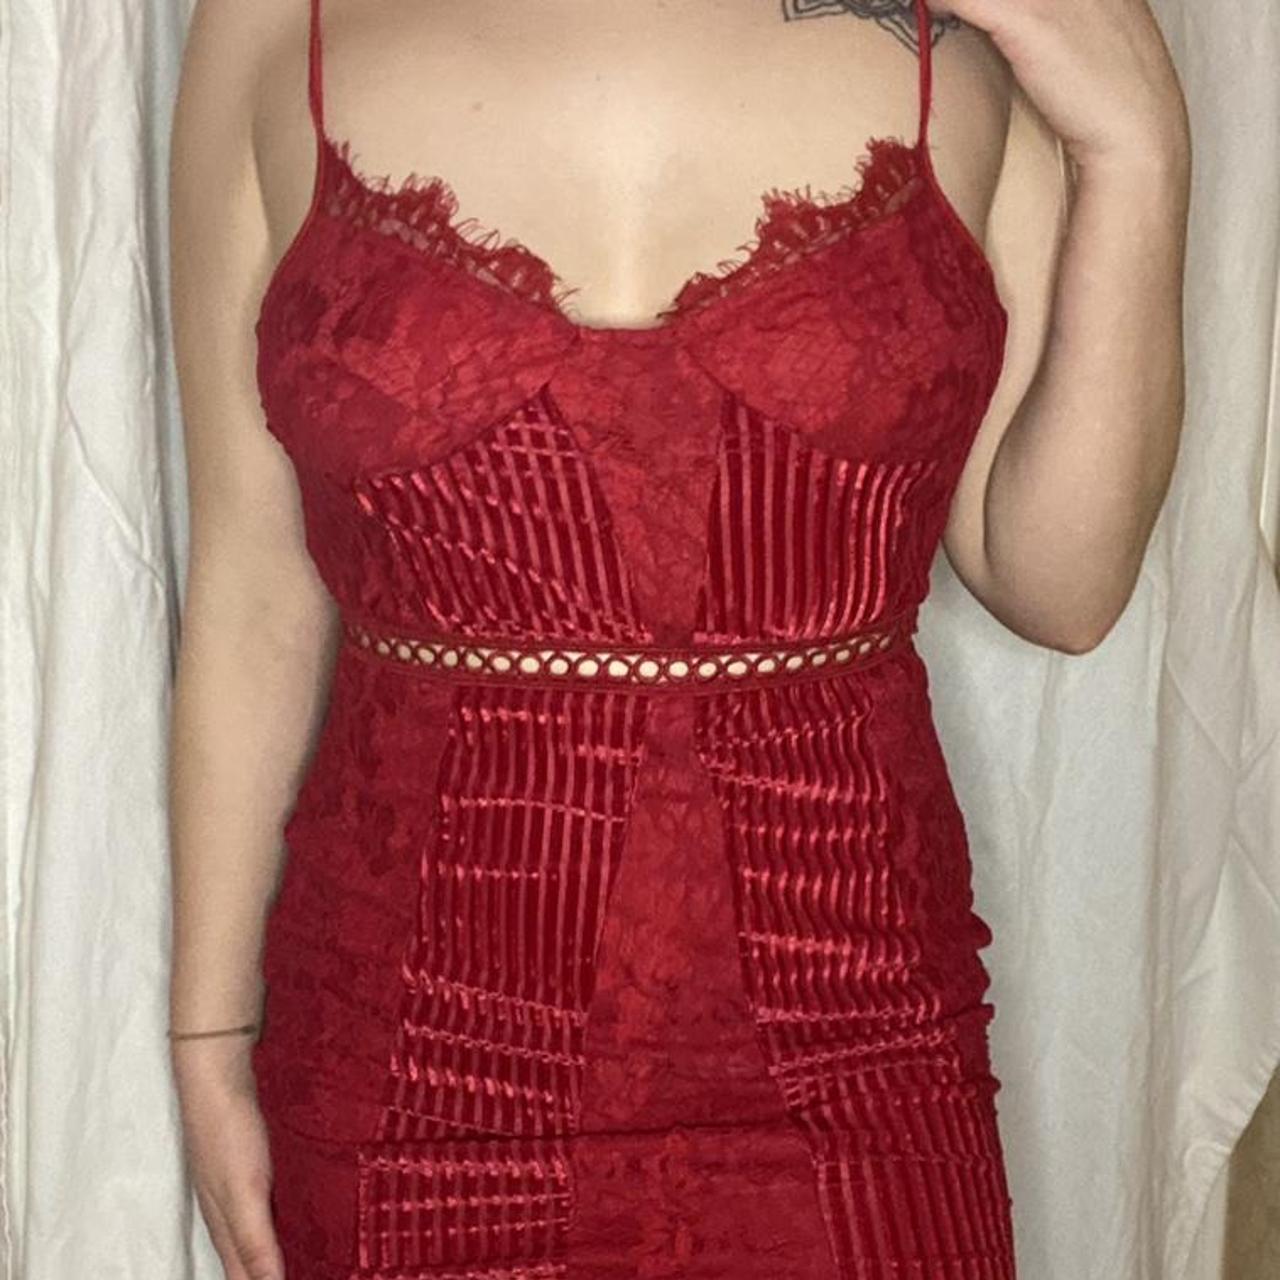 Red Strappy Lace Velvet Insert Bodycon Dress